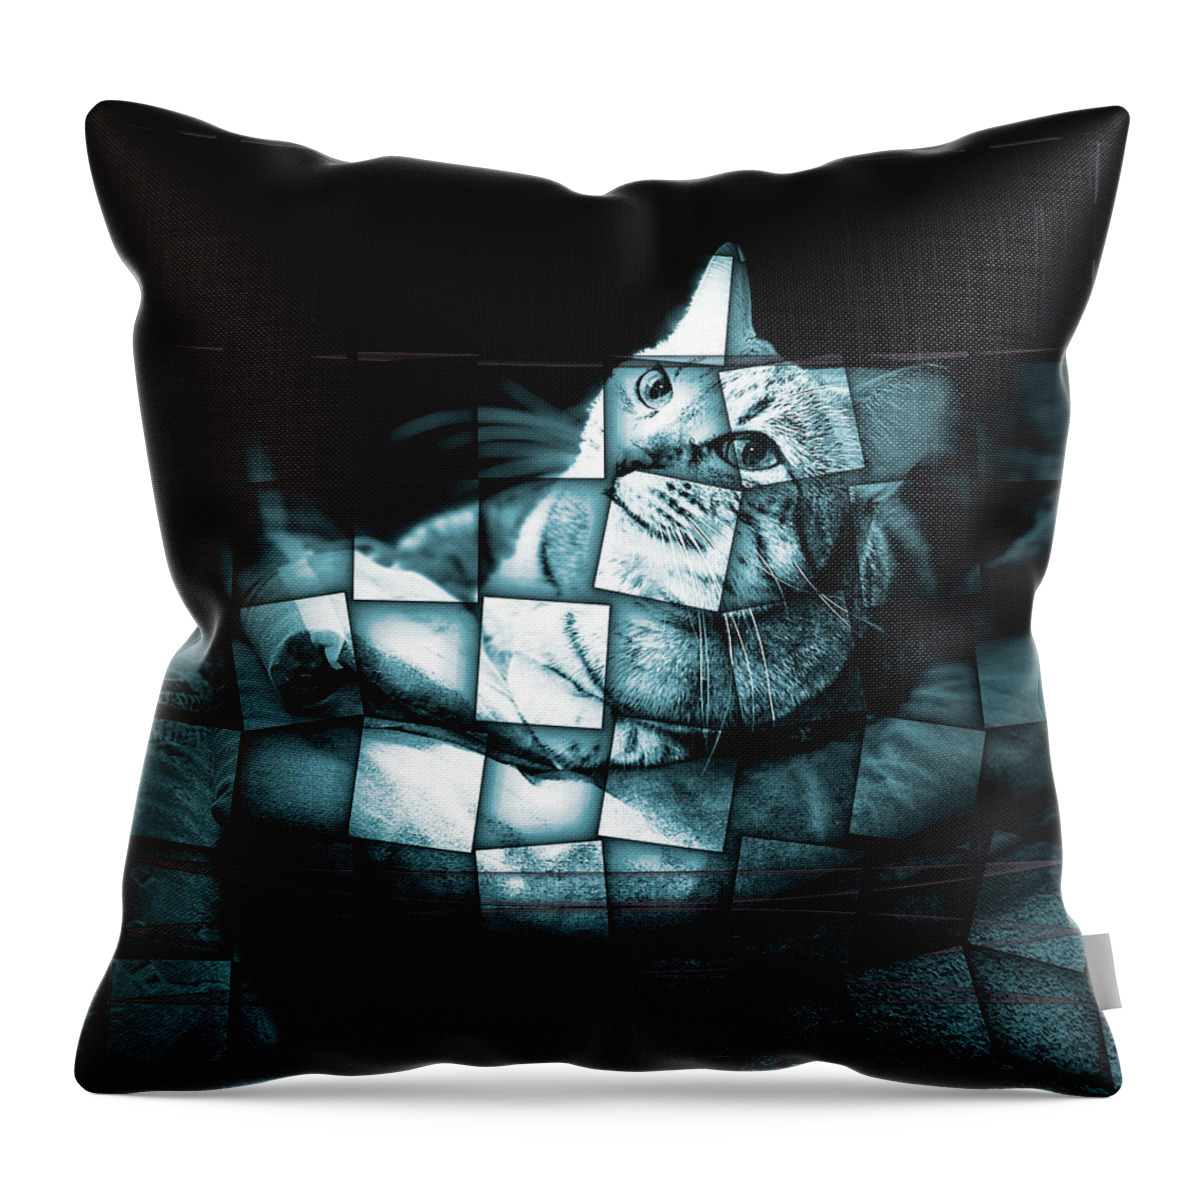 Artistic Throw Pillow featuring the digital art Yuli 4 #1 by Marko Sabotin